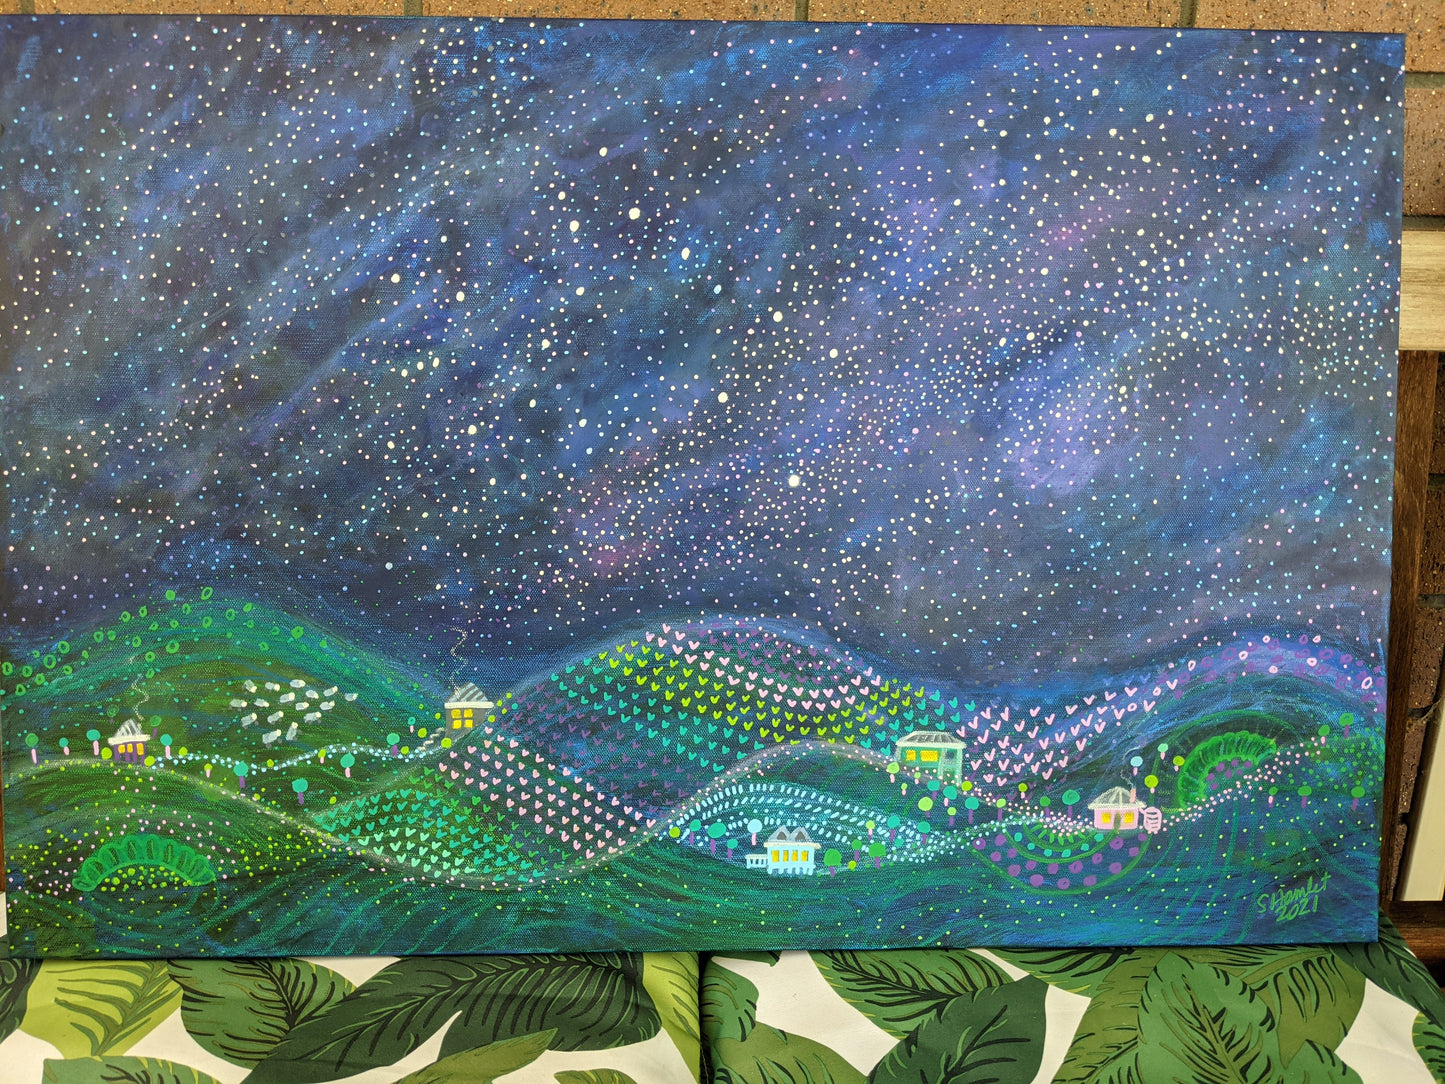 Starry Trails - ORIGINAL artwork - SOLD